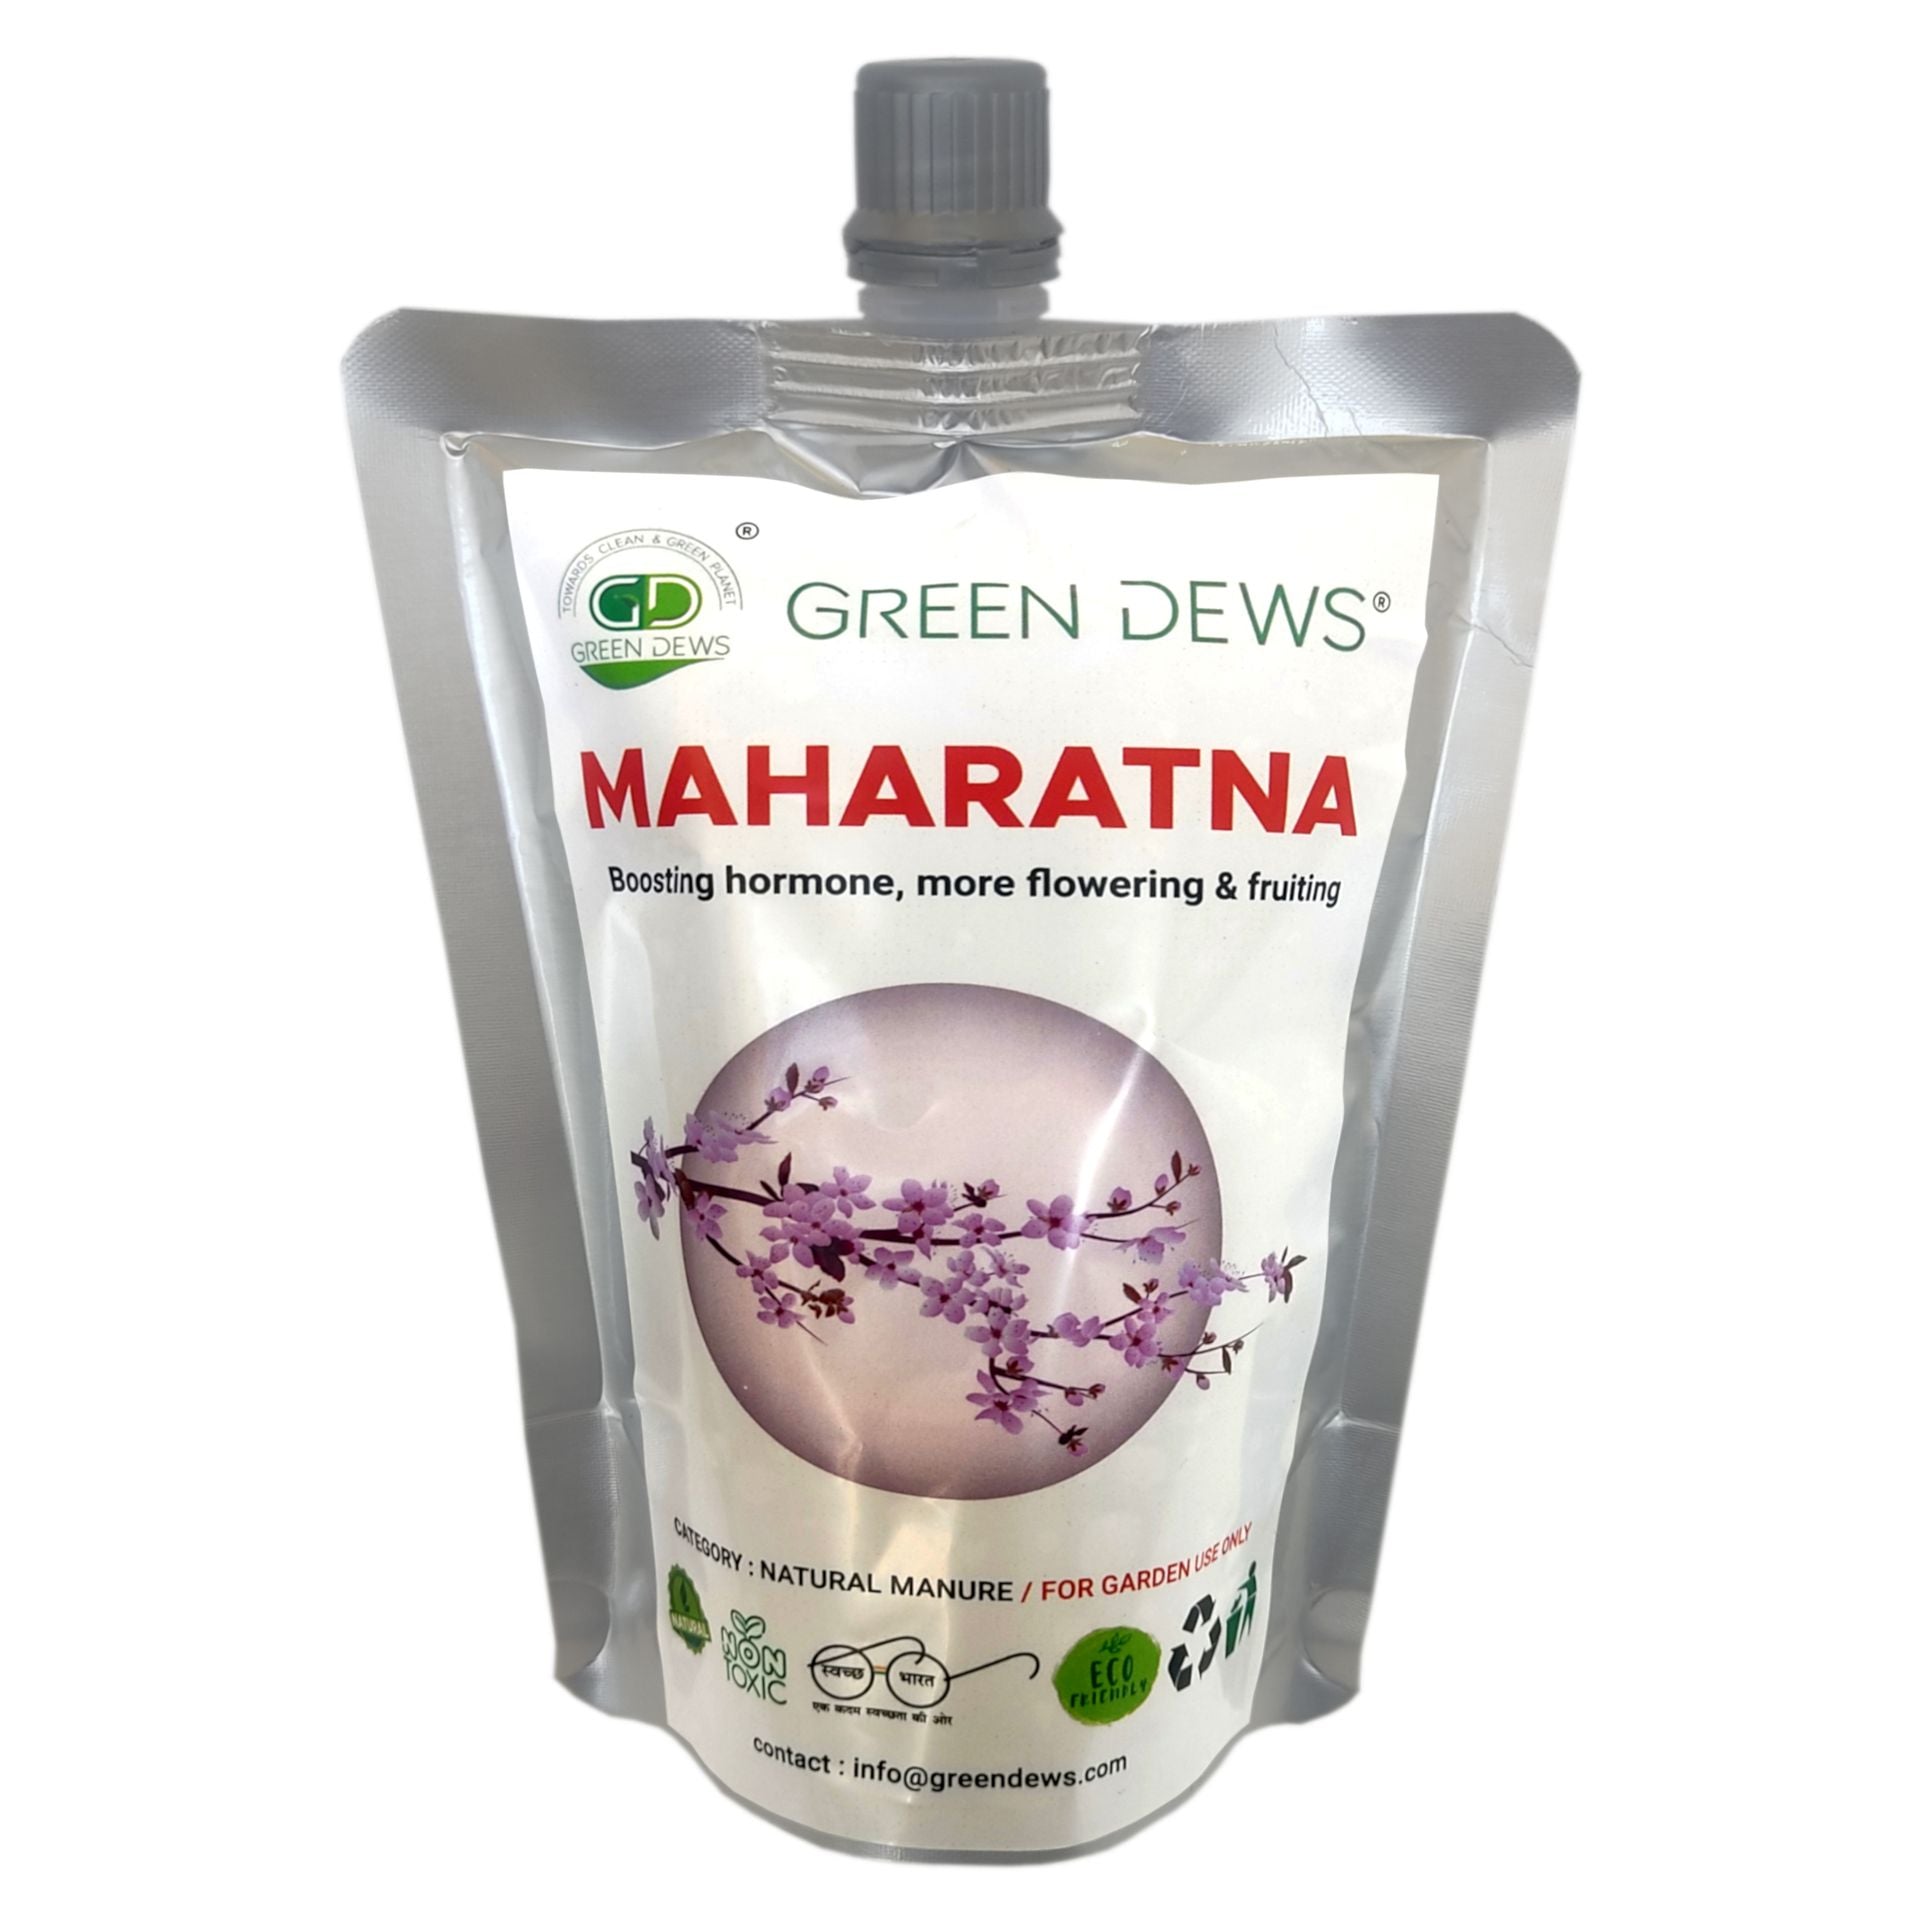 Green Dews Maharatna Plant Growth Promoter Immunity Booster More Flowering and Fruiting boosting fertilizer organic liquid - hfnl!fe